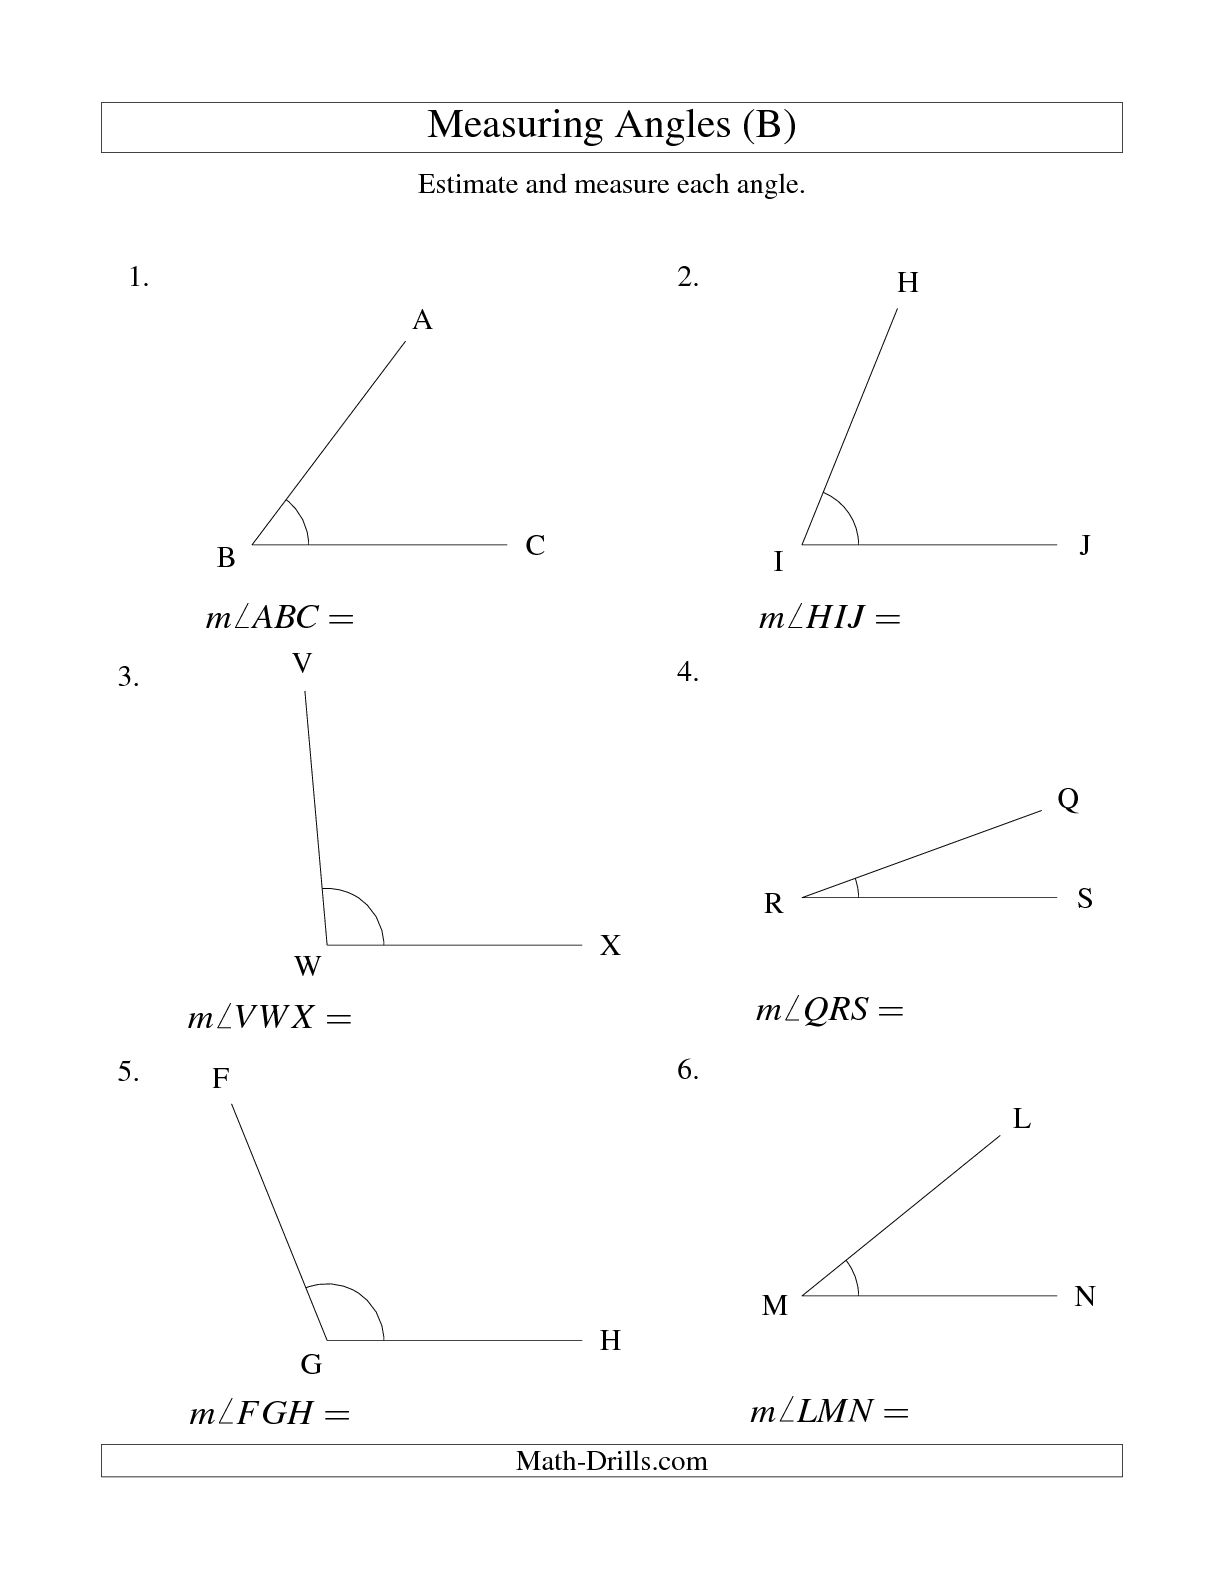 estimating-angles-worksheet